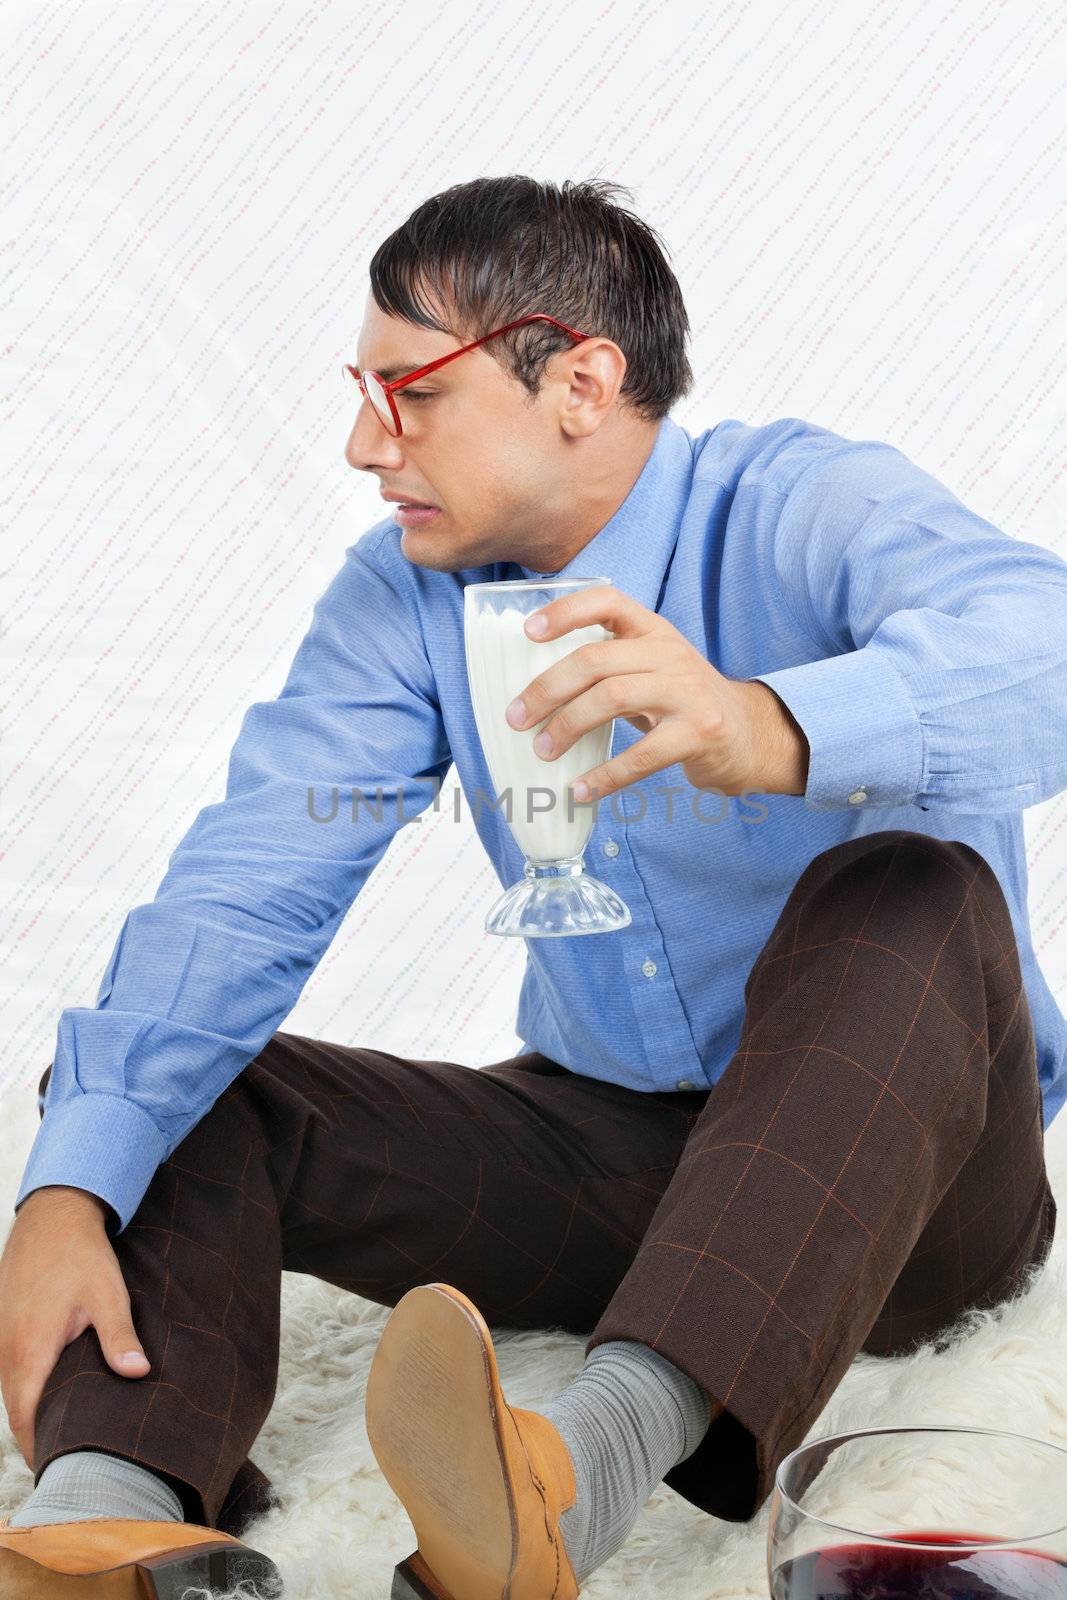 Geek Holding Healthy Drink by leaf